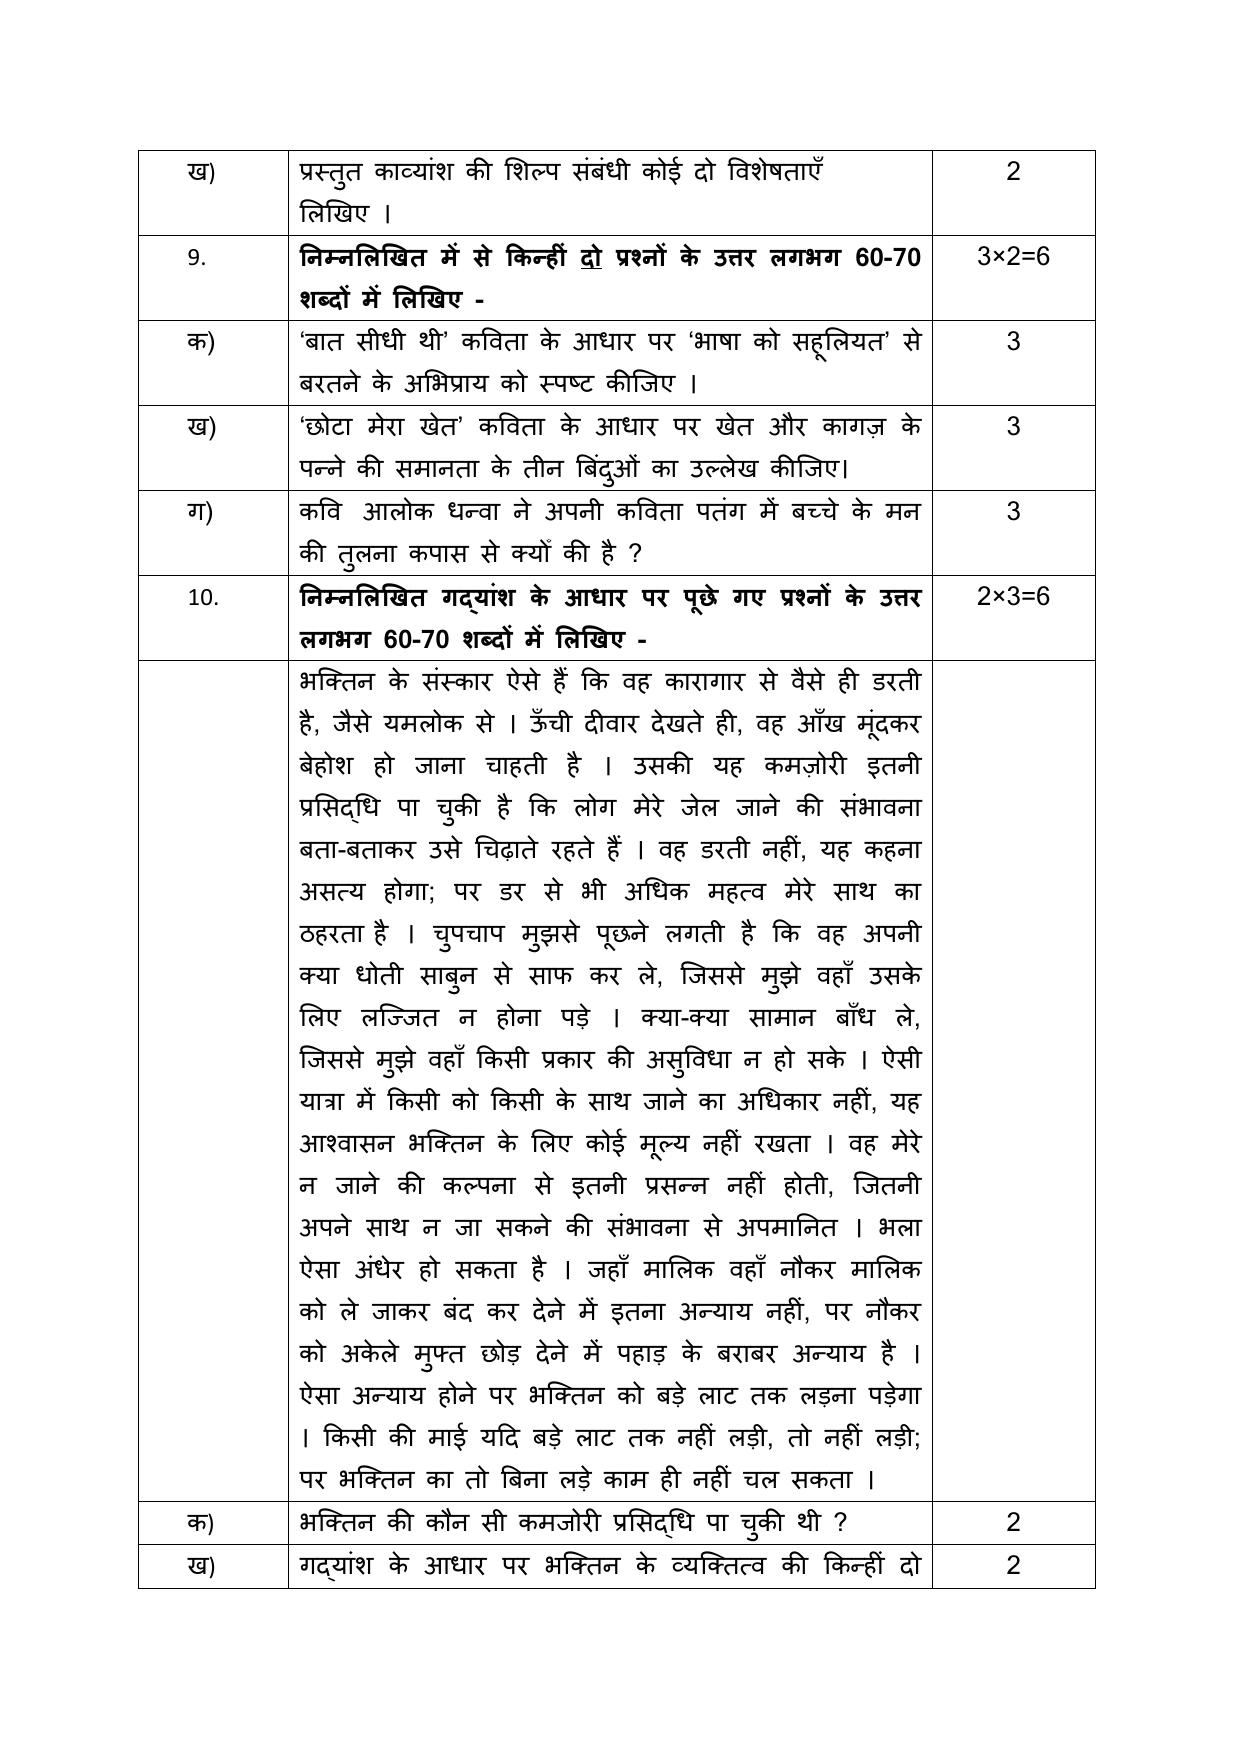 CBSE Class 12 Hindi Adhaar -Sample Paper 2019-20 - Page 6